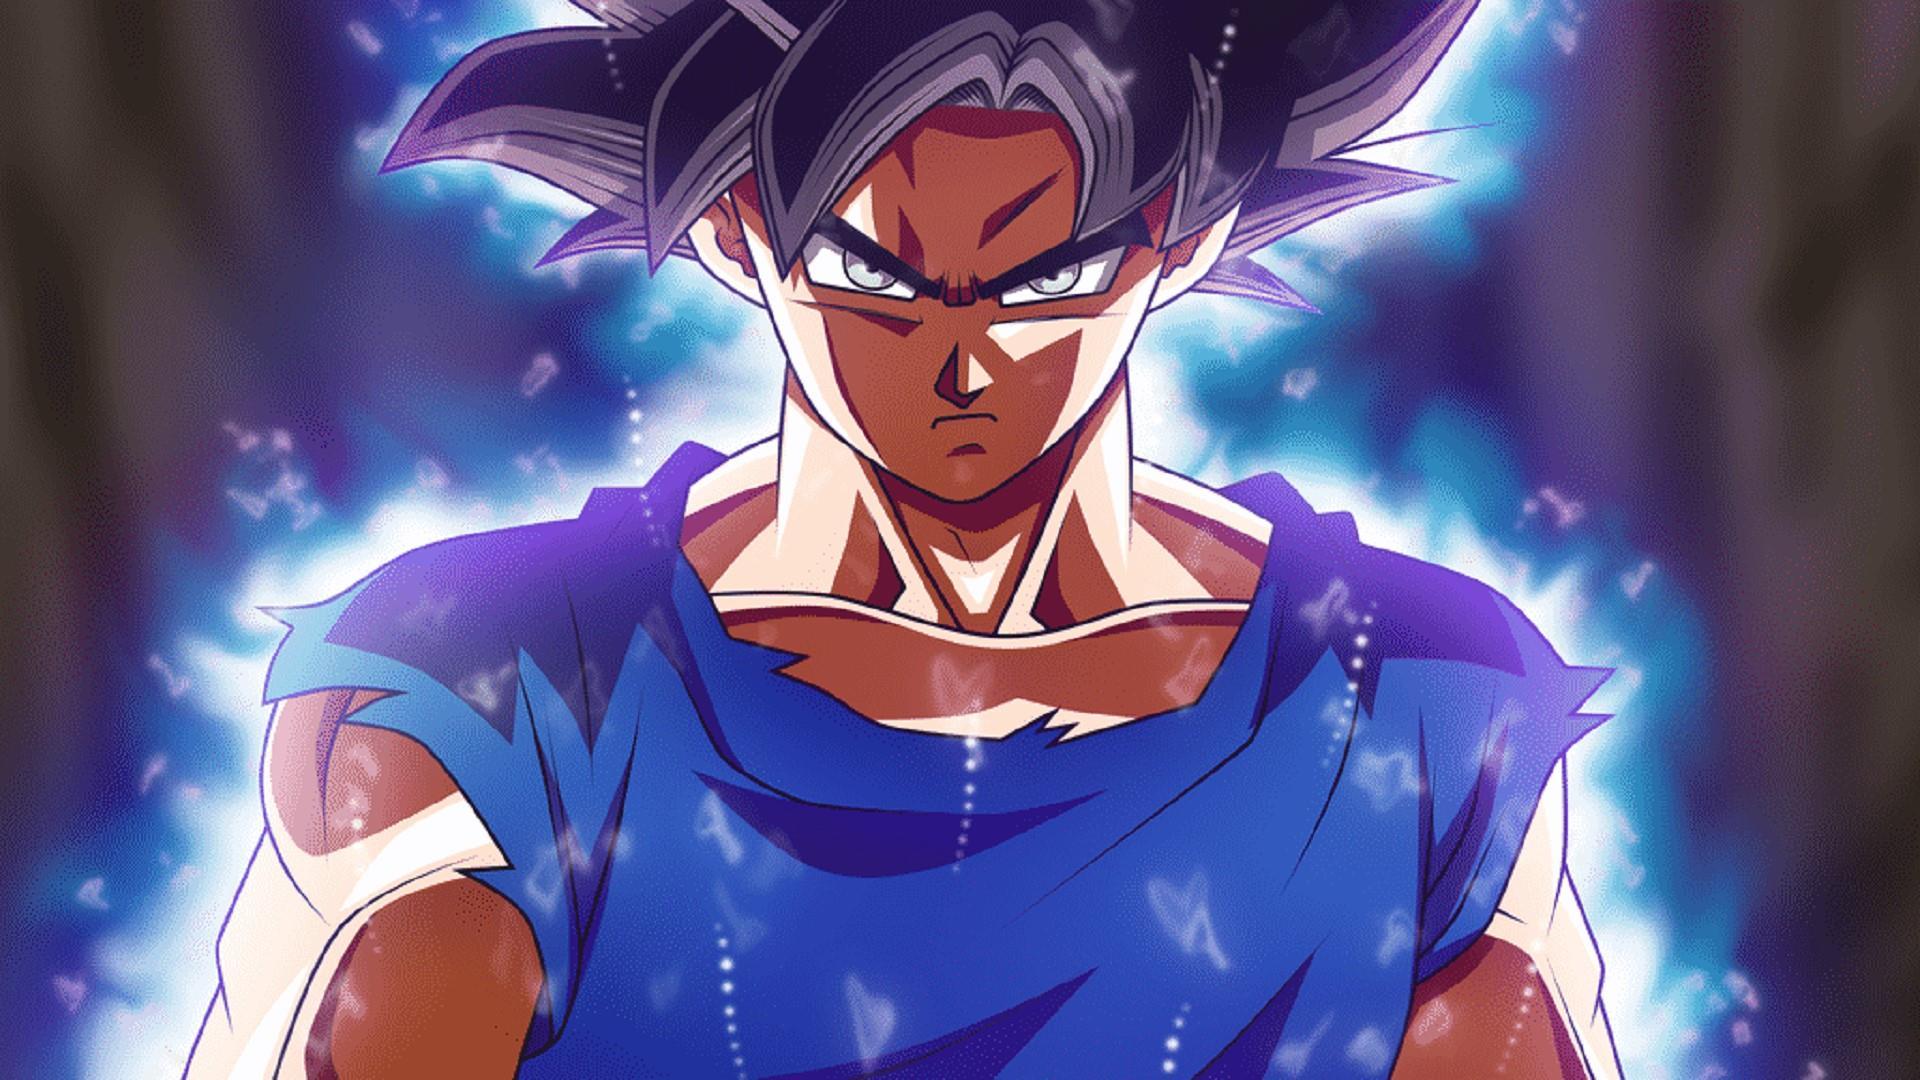 Goku HD Wallpapers  Top Best Goku Ultra HD Backgrounds